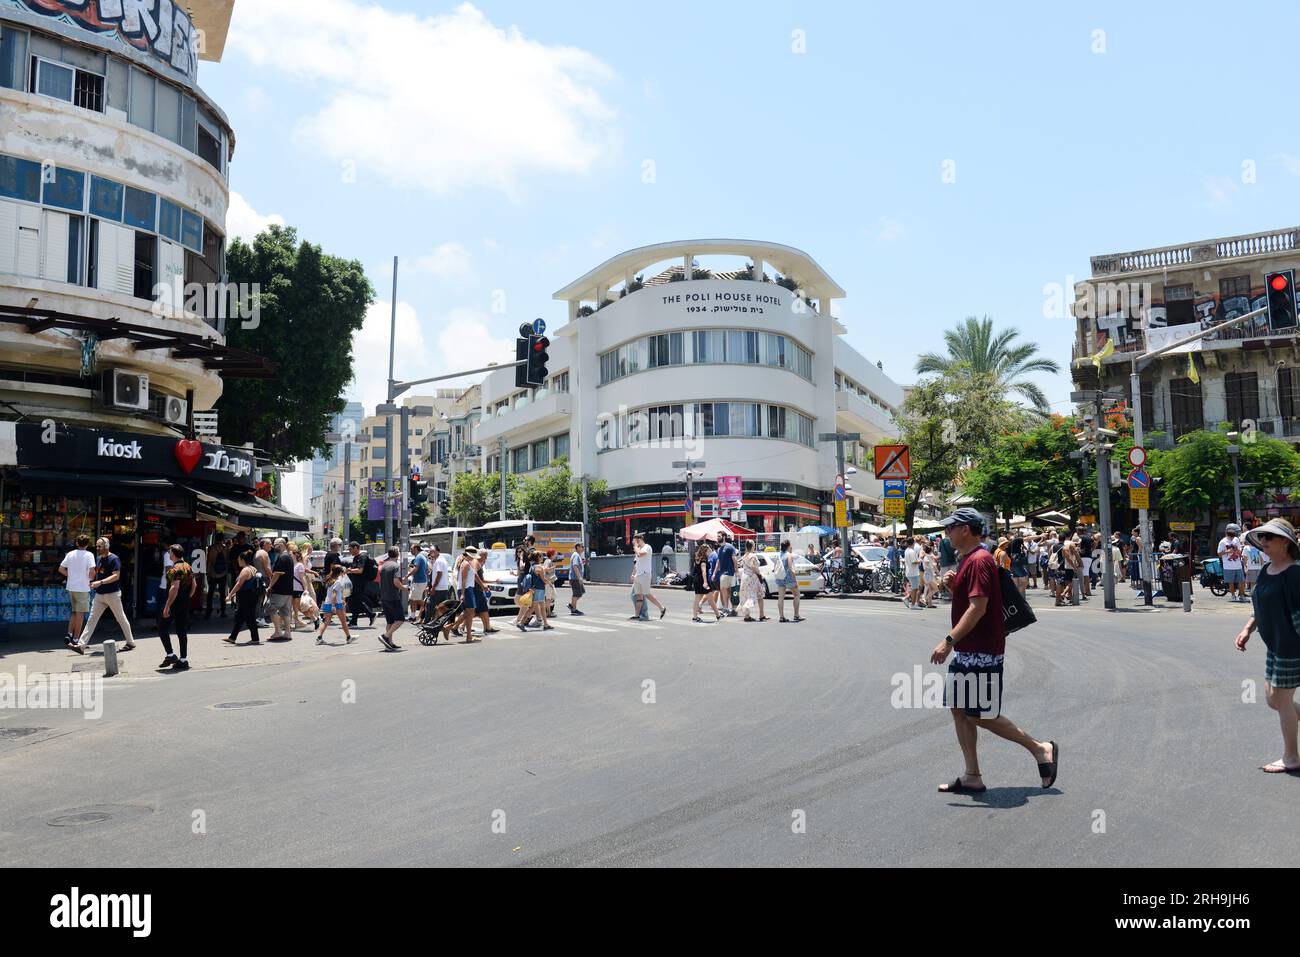 Pedestrians crossing Allenby street in Tel-Aviv, Israel. Stock Photo